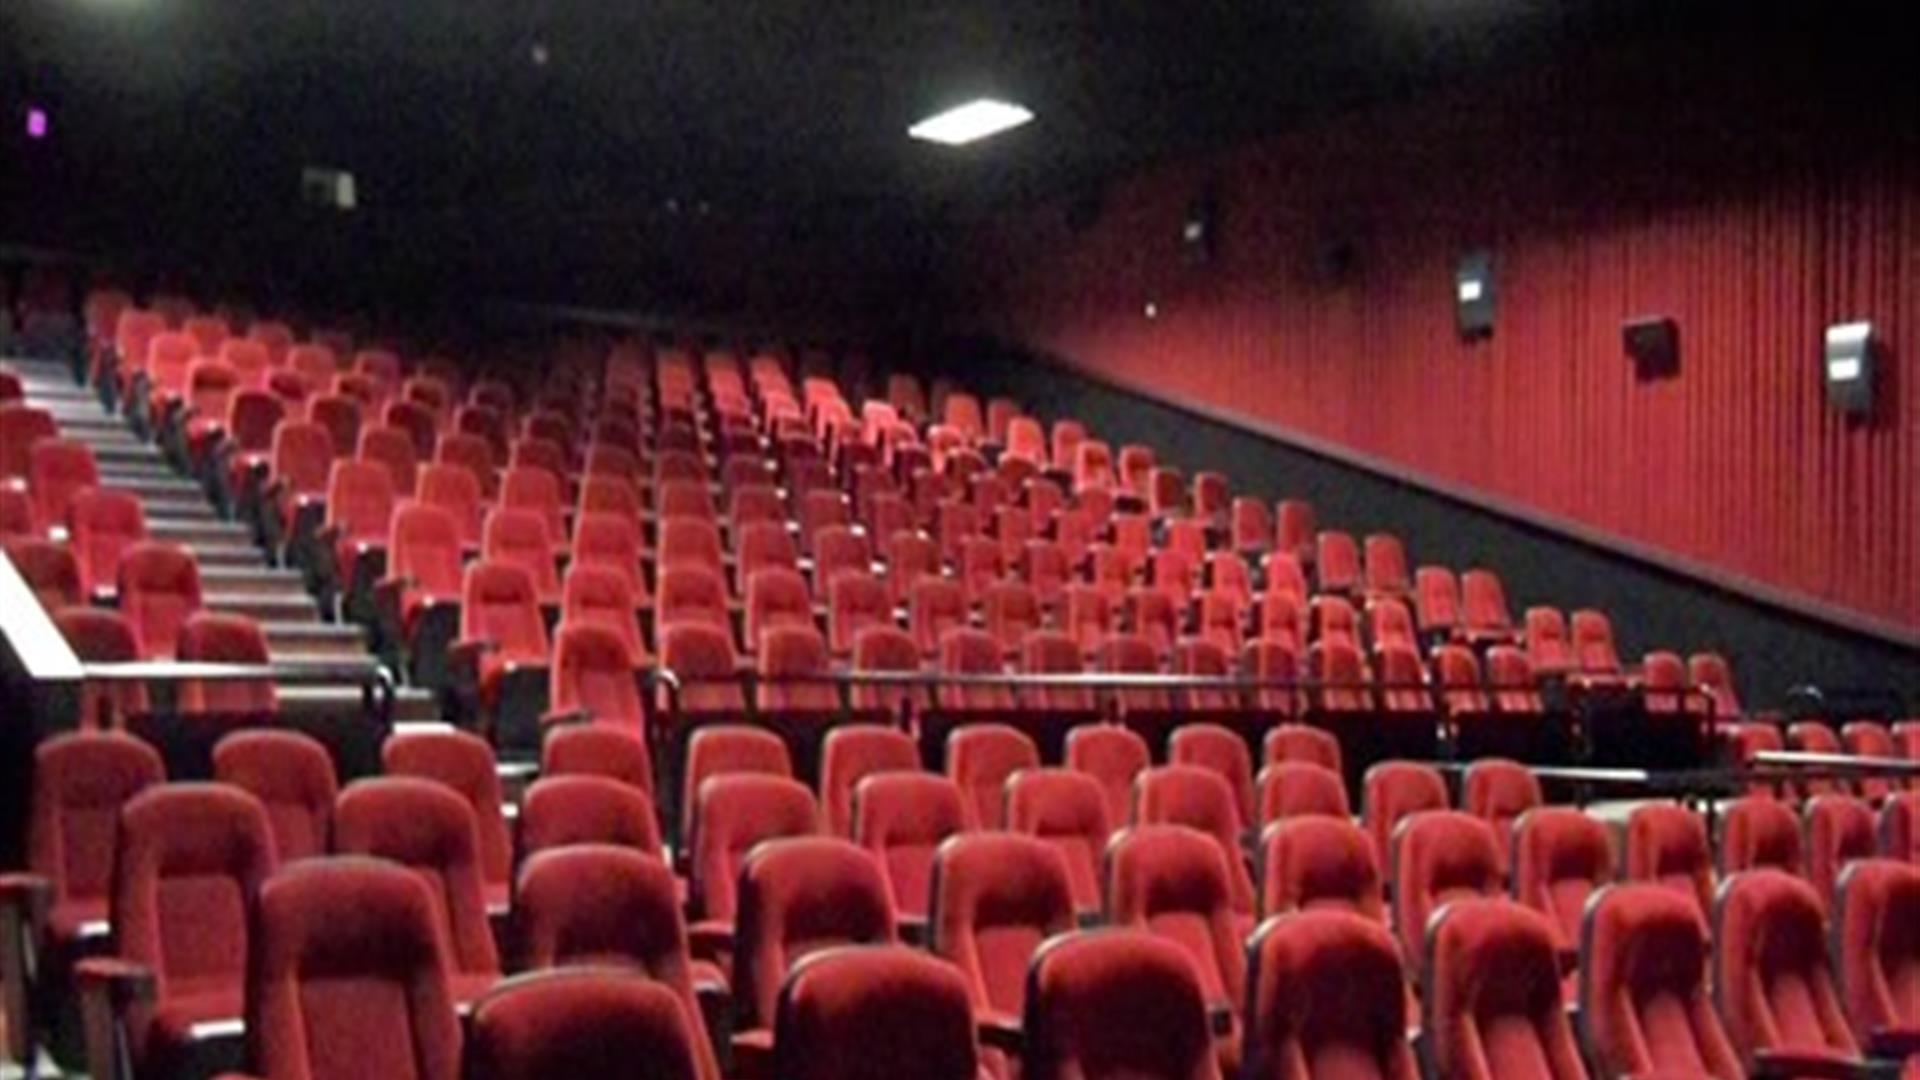 Omniplex Cinema Downpatrick